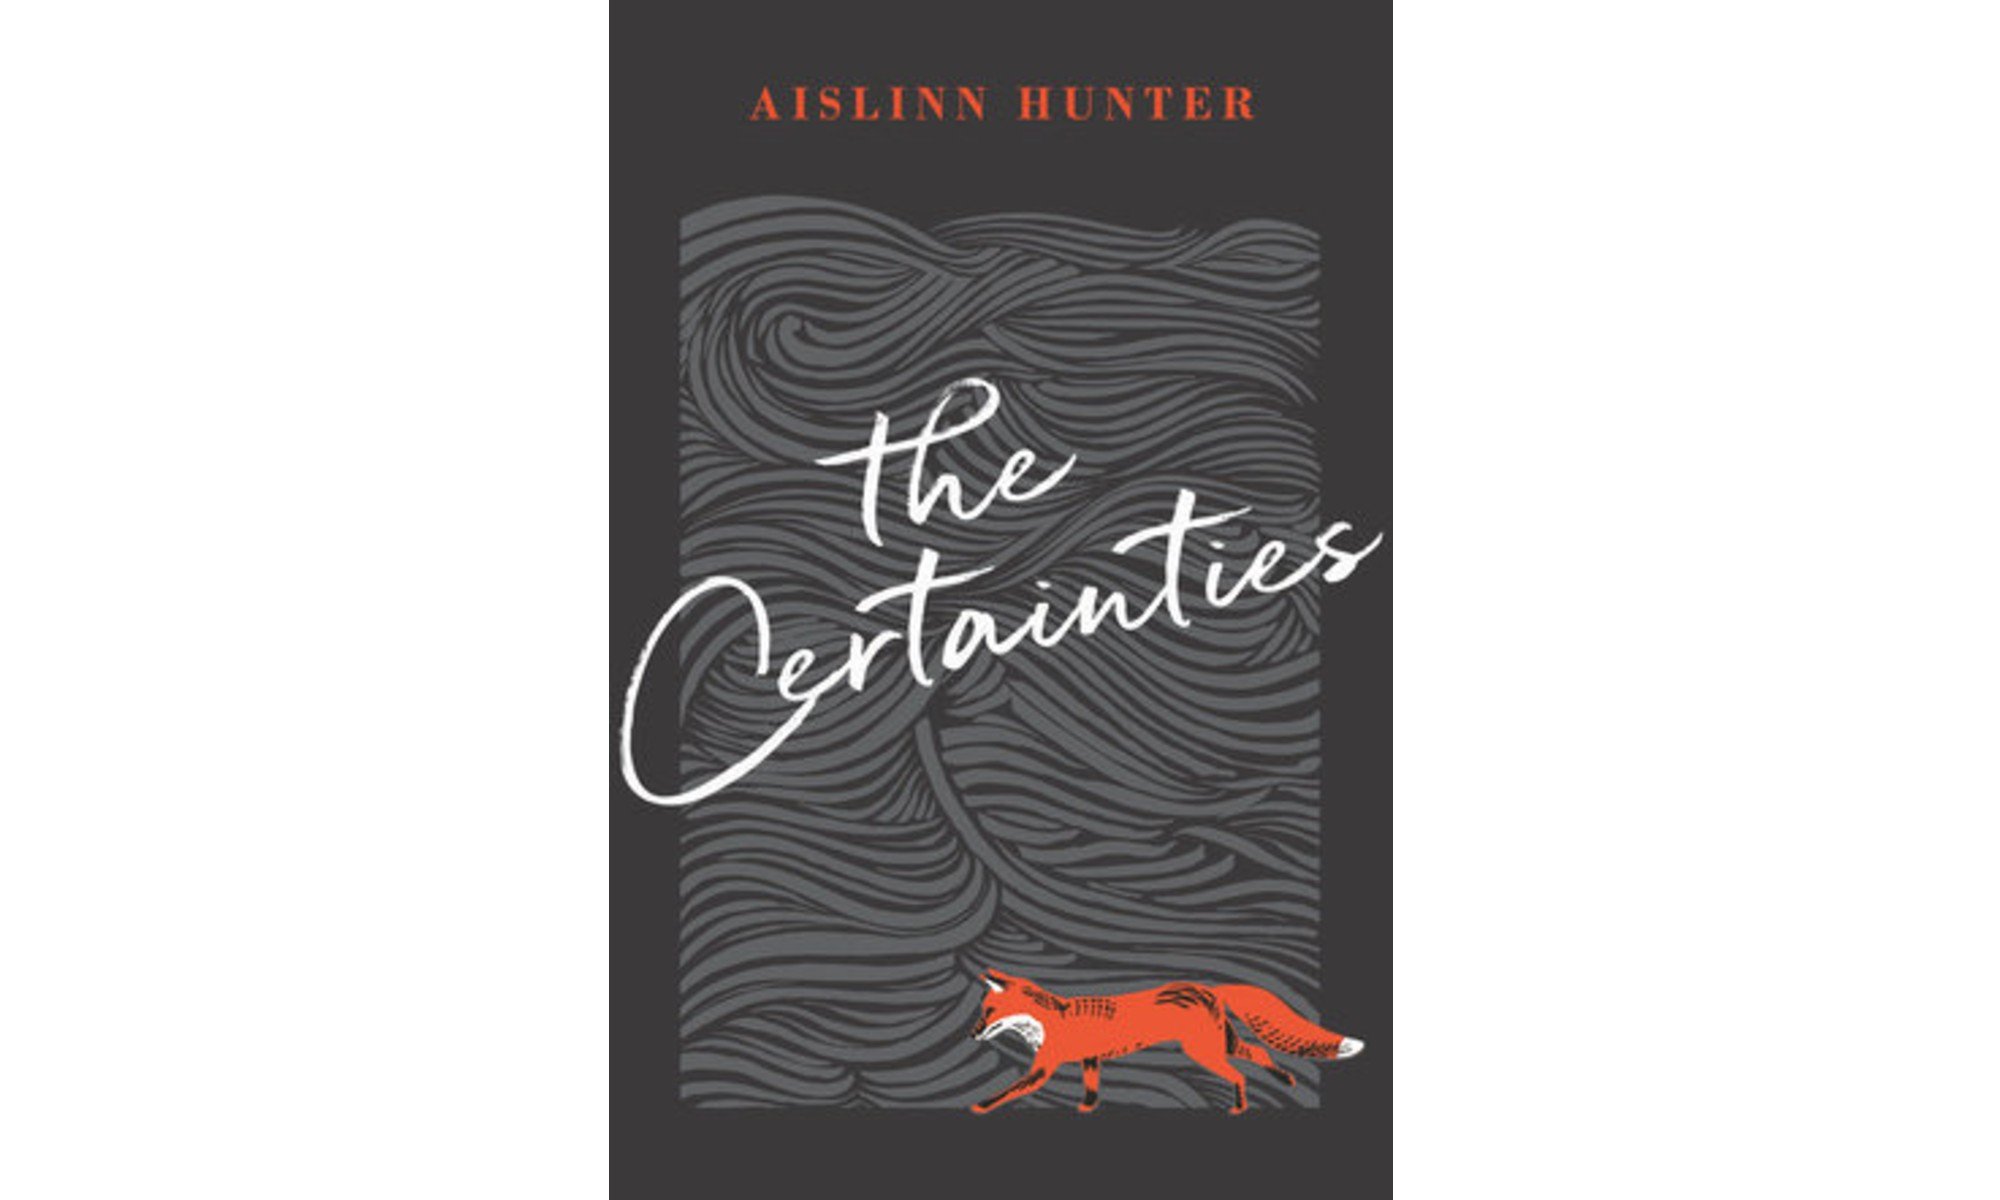 The cover of Aislinn Hunter's The Certainties